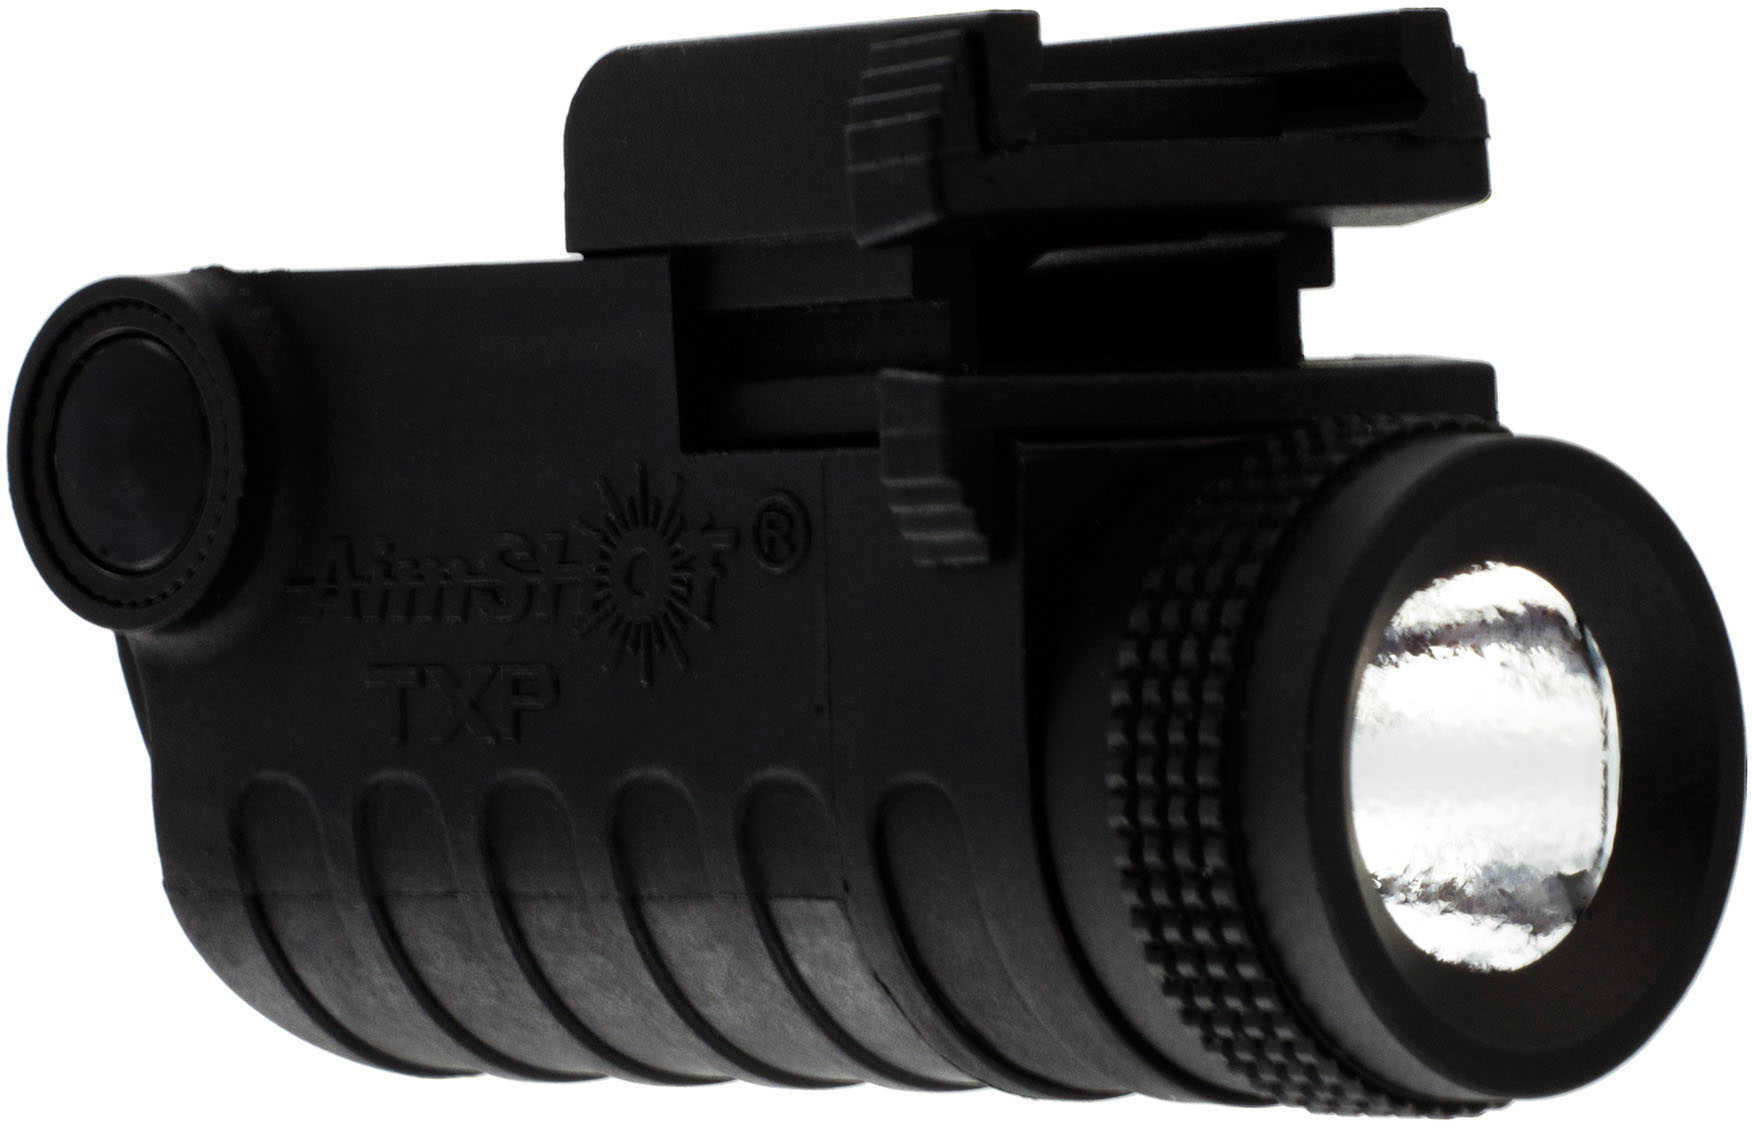 Aimshot Pistol LED Light Adjustable with Li-Ion Battery TXP